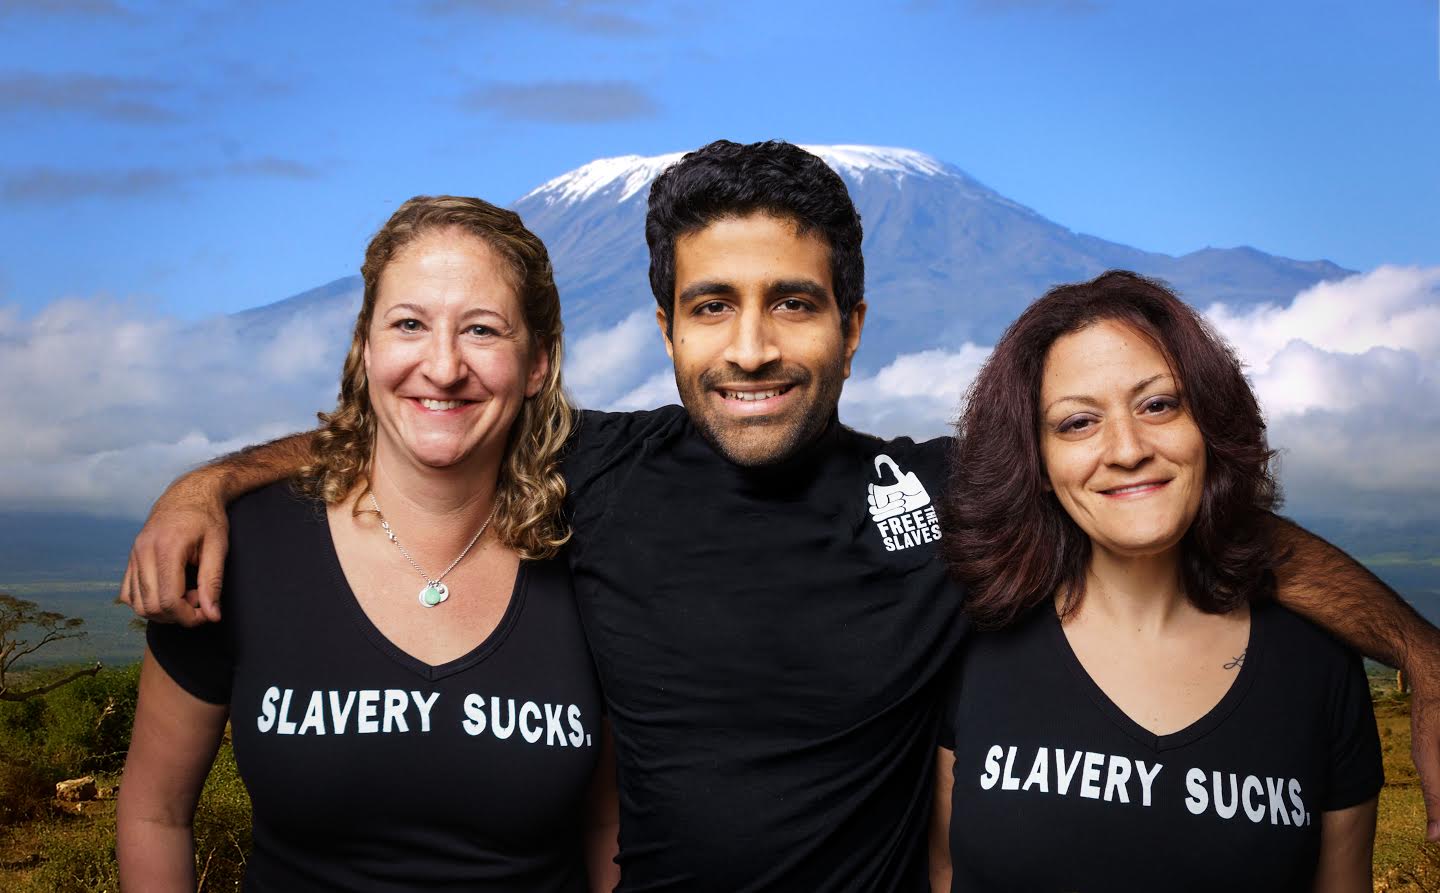 Climbing Kili to End Slavery